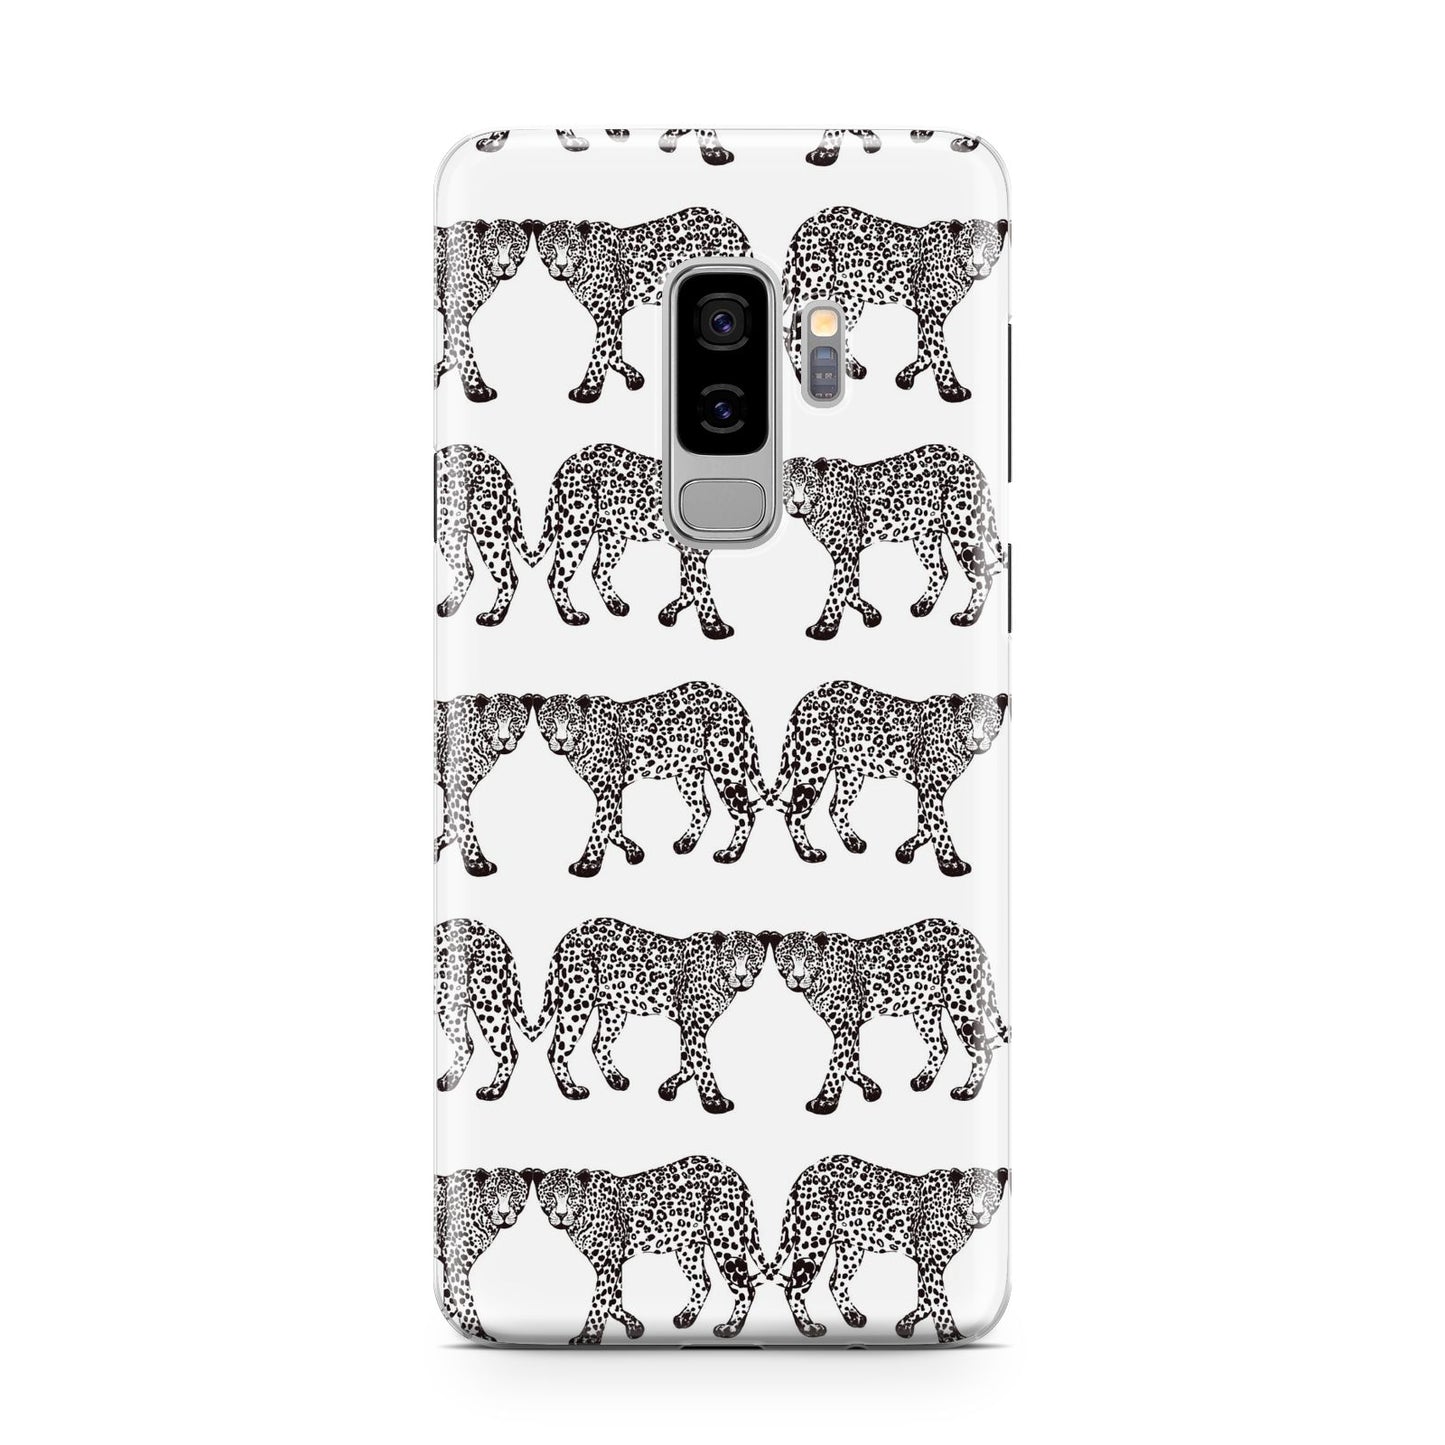 Monochrome Mirrored Leopard Print Samsung Galaxy S9 Plus Case on Silver phone